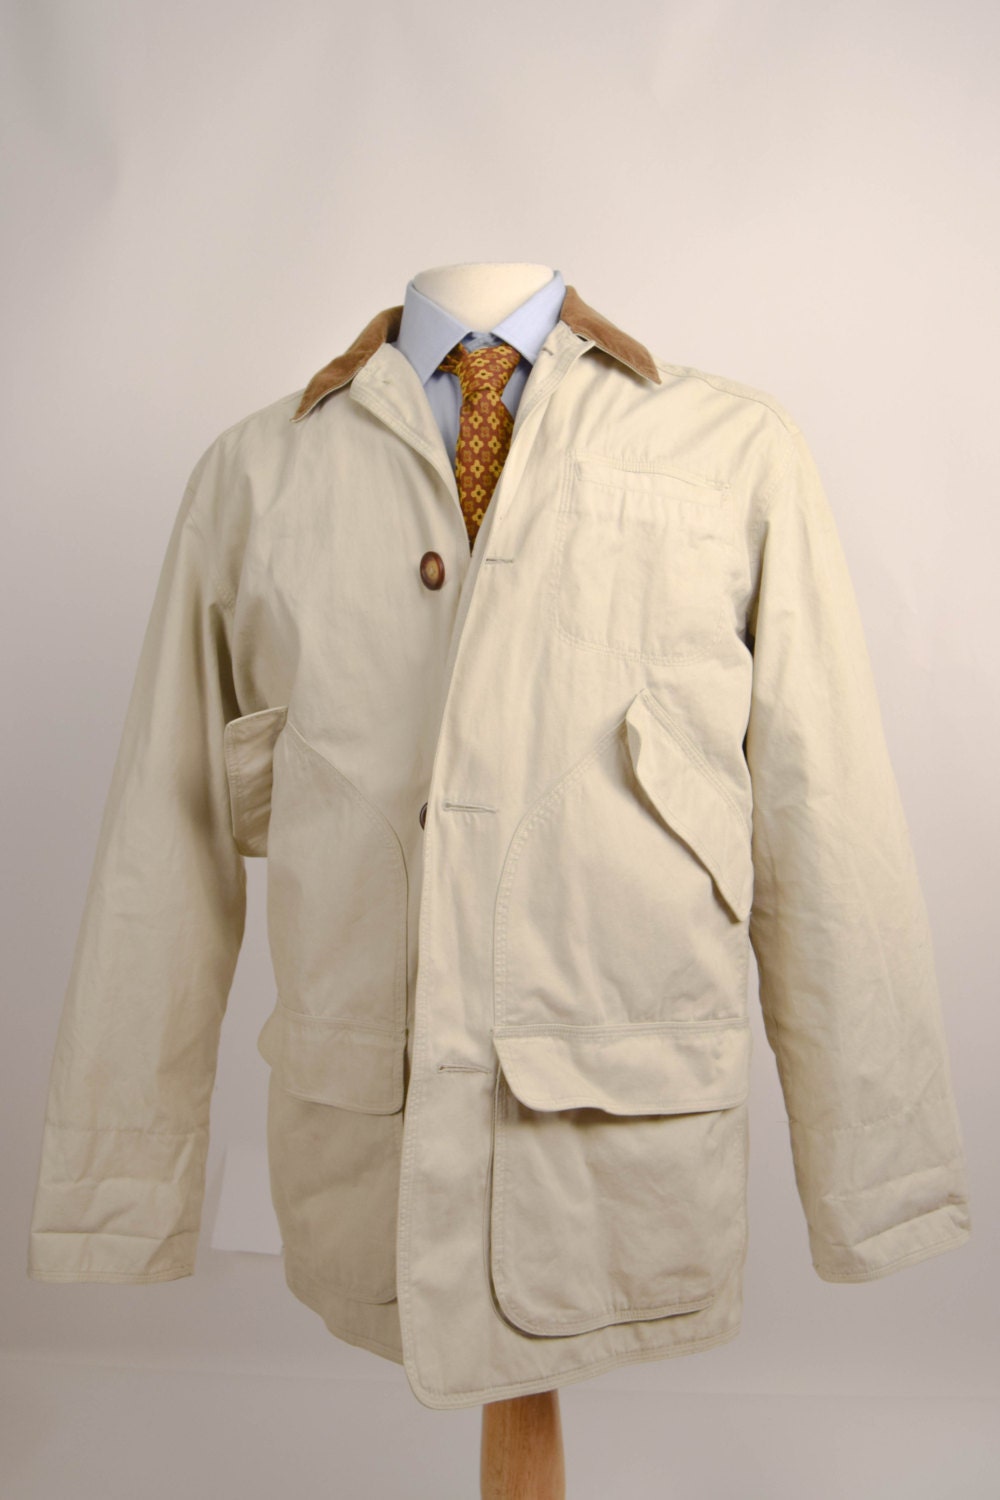 UNCO&BOROR High quality Spring Jacket men mandarin collar